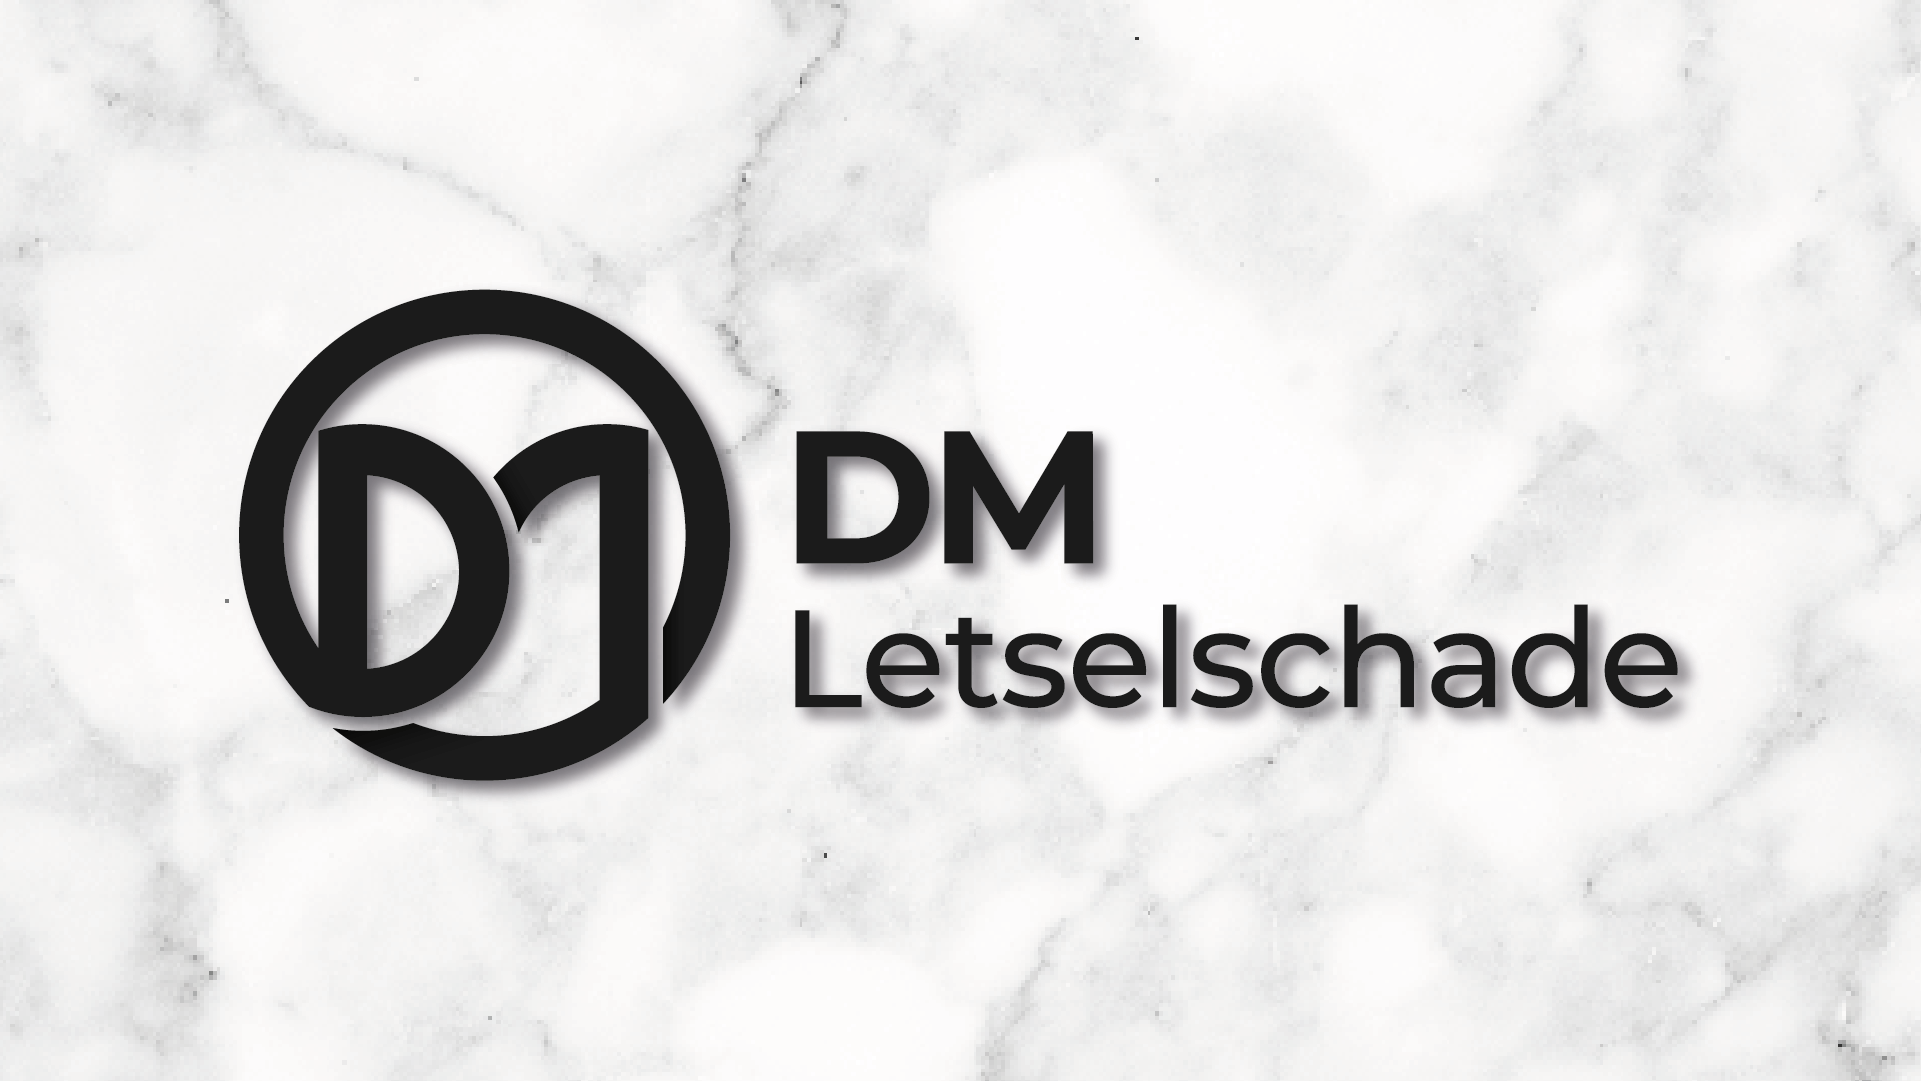 DM Letselschade logo 6